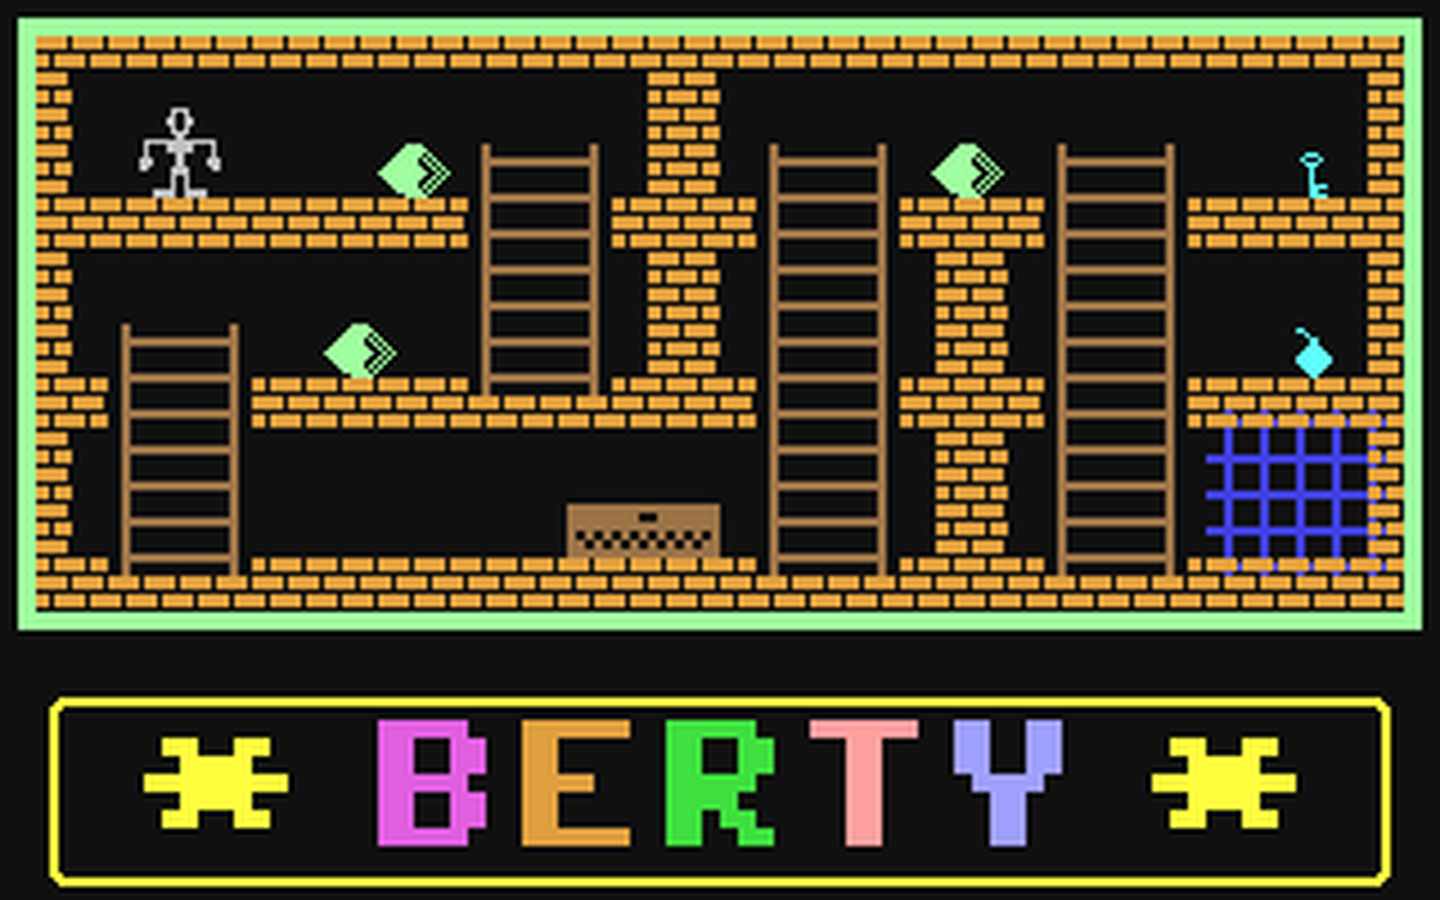 C64 GameBase Berty (Public_Domain) 1986